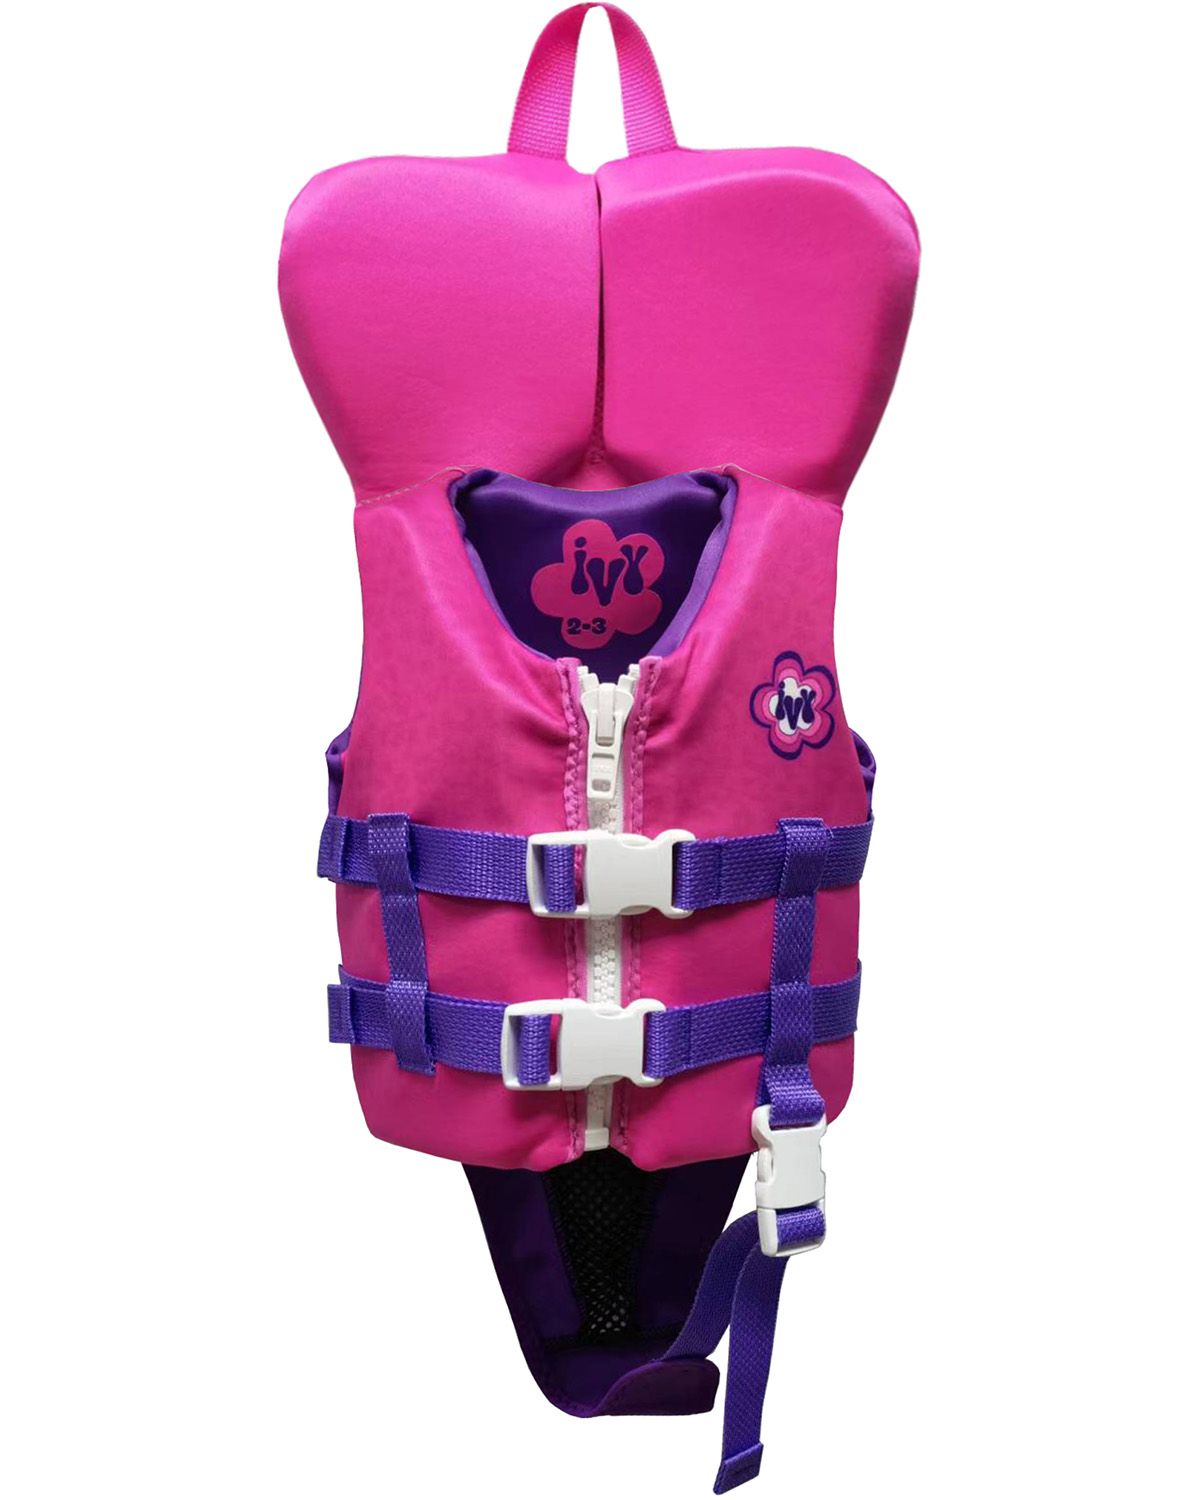 2023 IVY Junior Girls Vest with Collar -Ivy231700-Pink Leopard-2to3